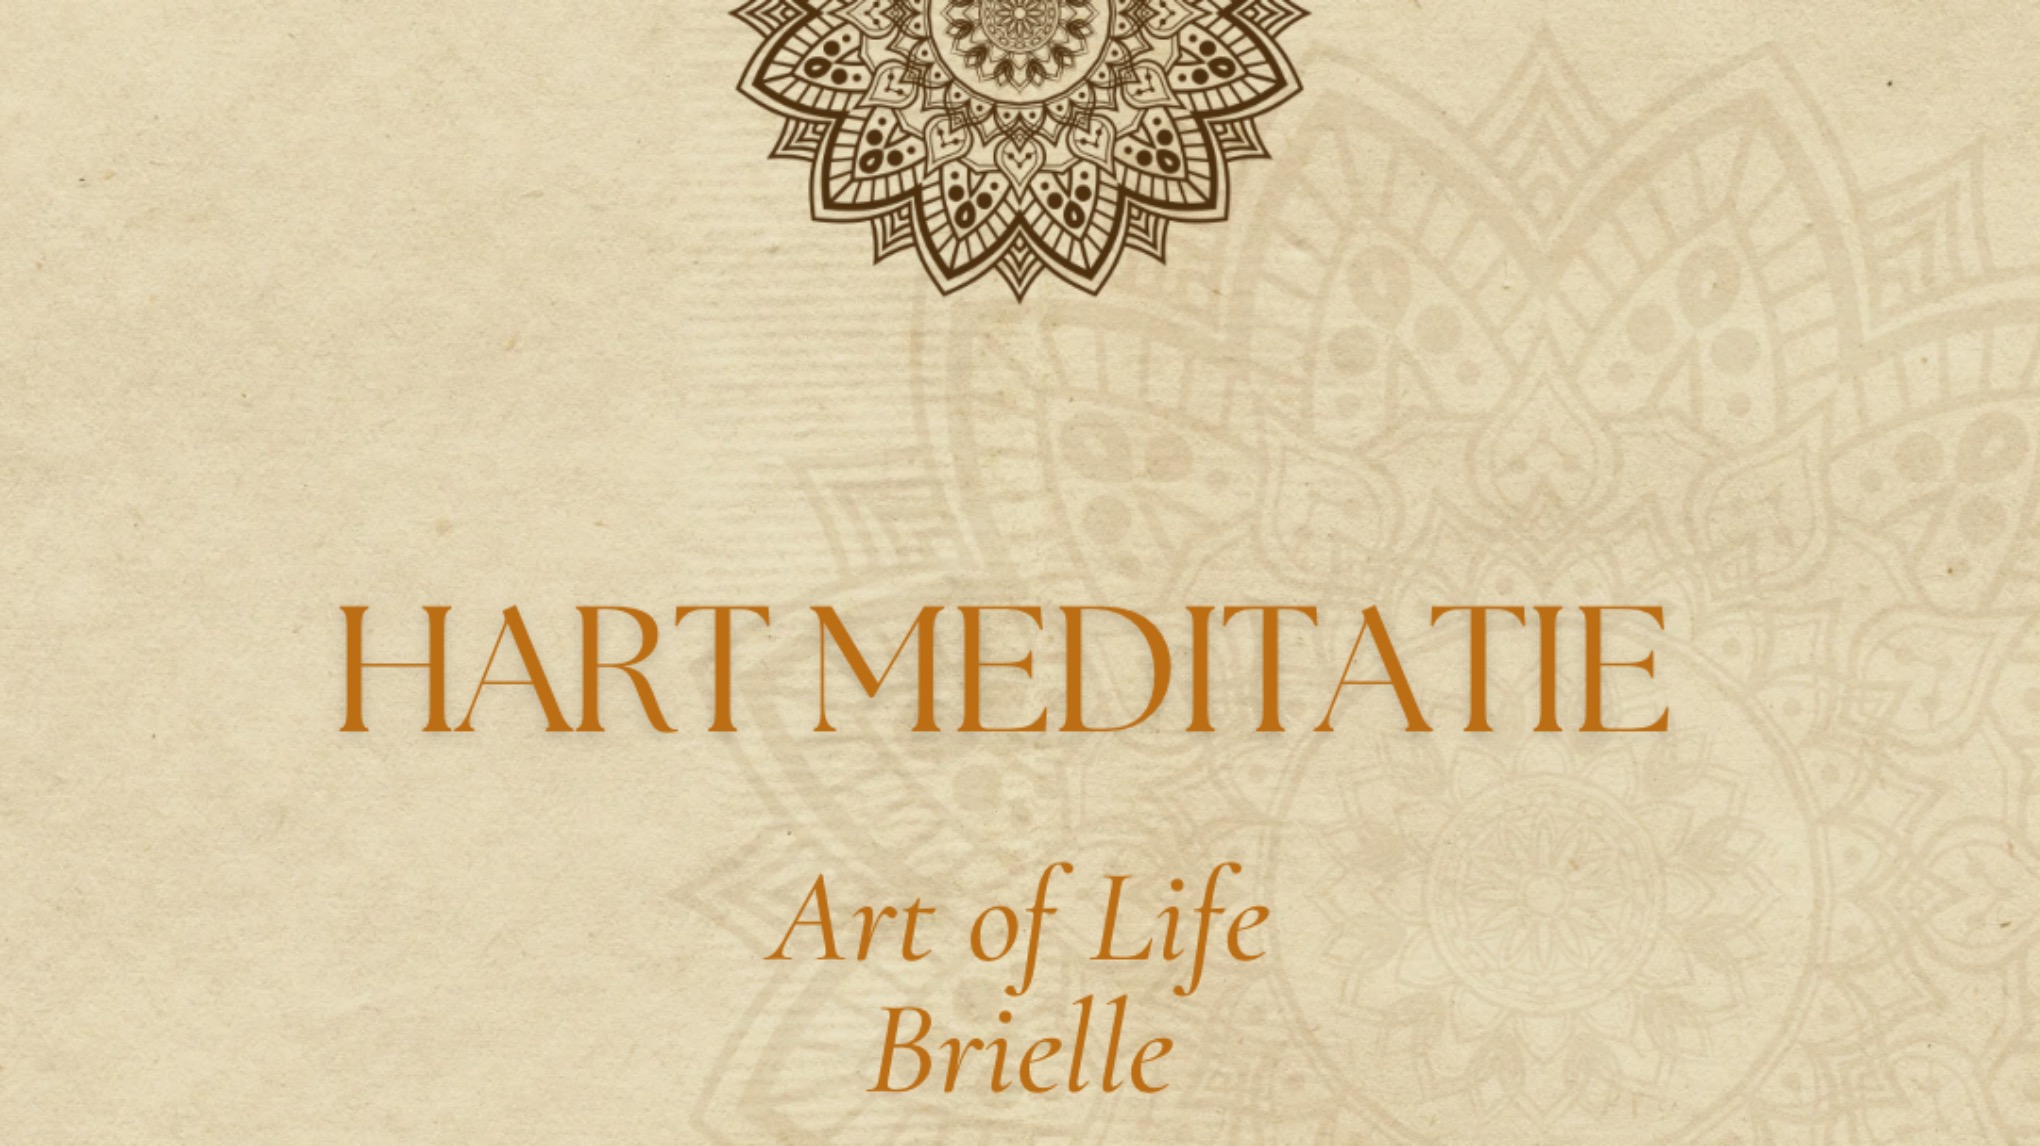 Hart meditatie Art of life Brielle